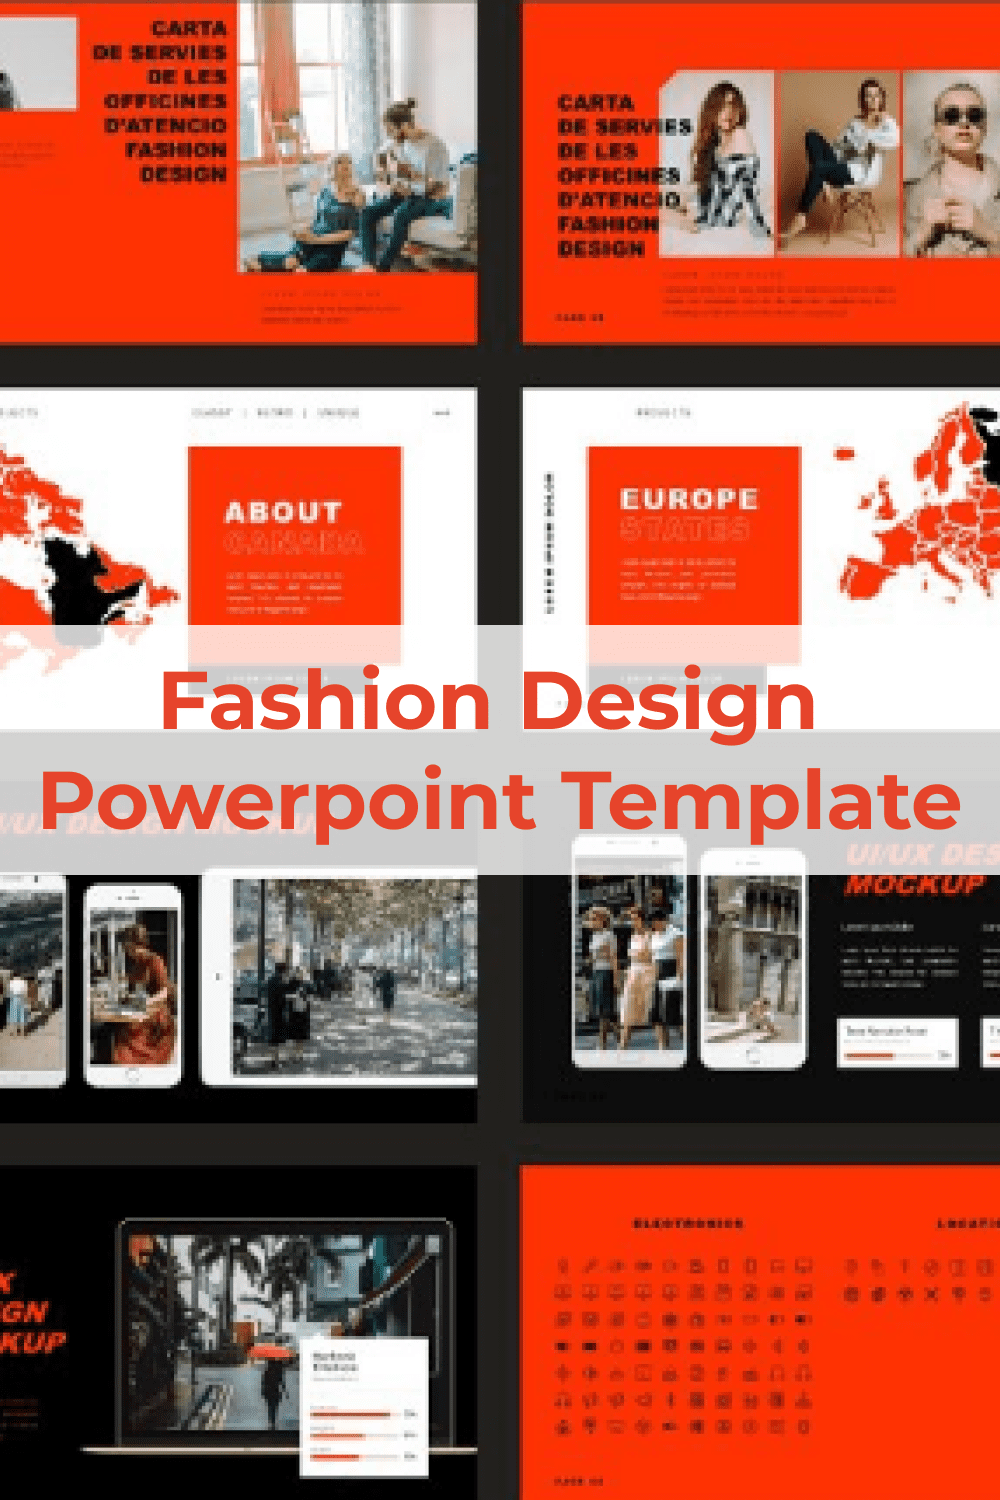 Fashion Design Powerpoint Template Pinterest.